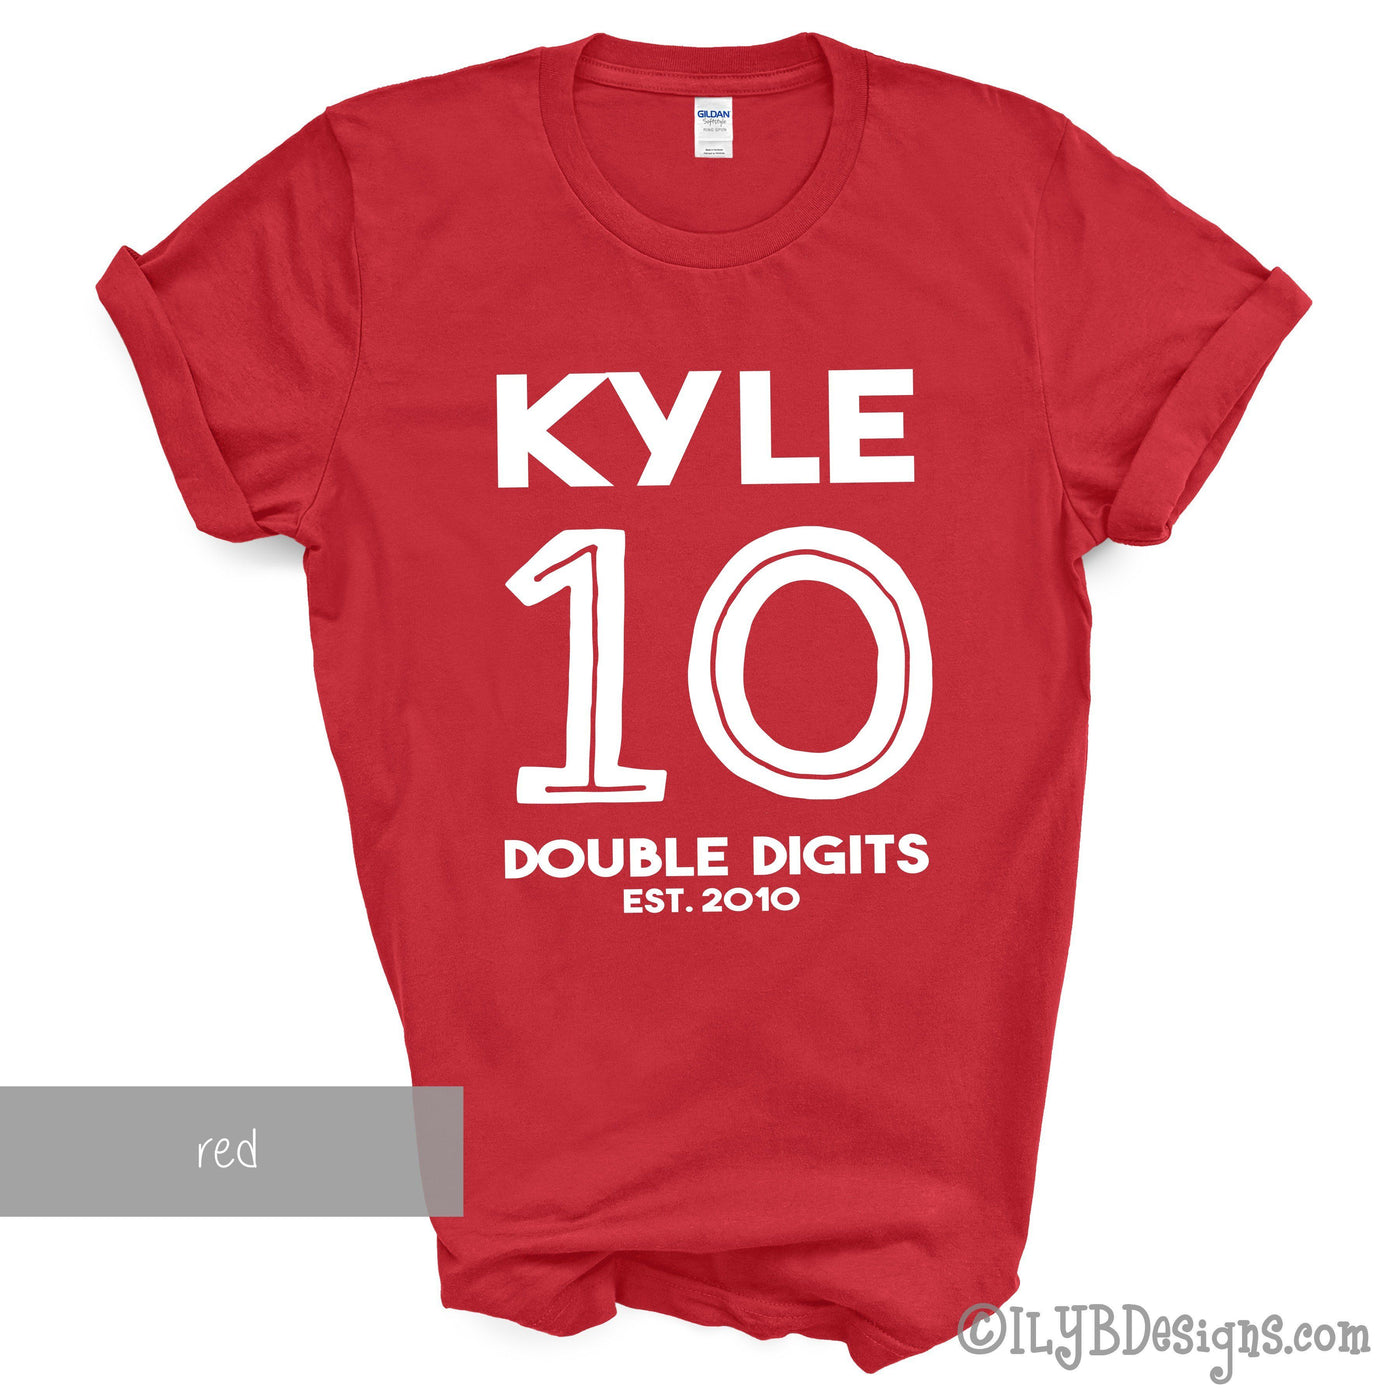 10th Birthday Shirt | Officially 10 Double Digits Tenth Birthday Shirt - ILYB Designs